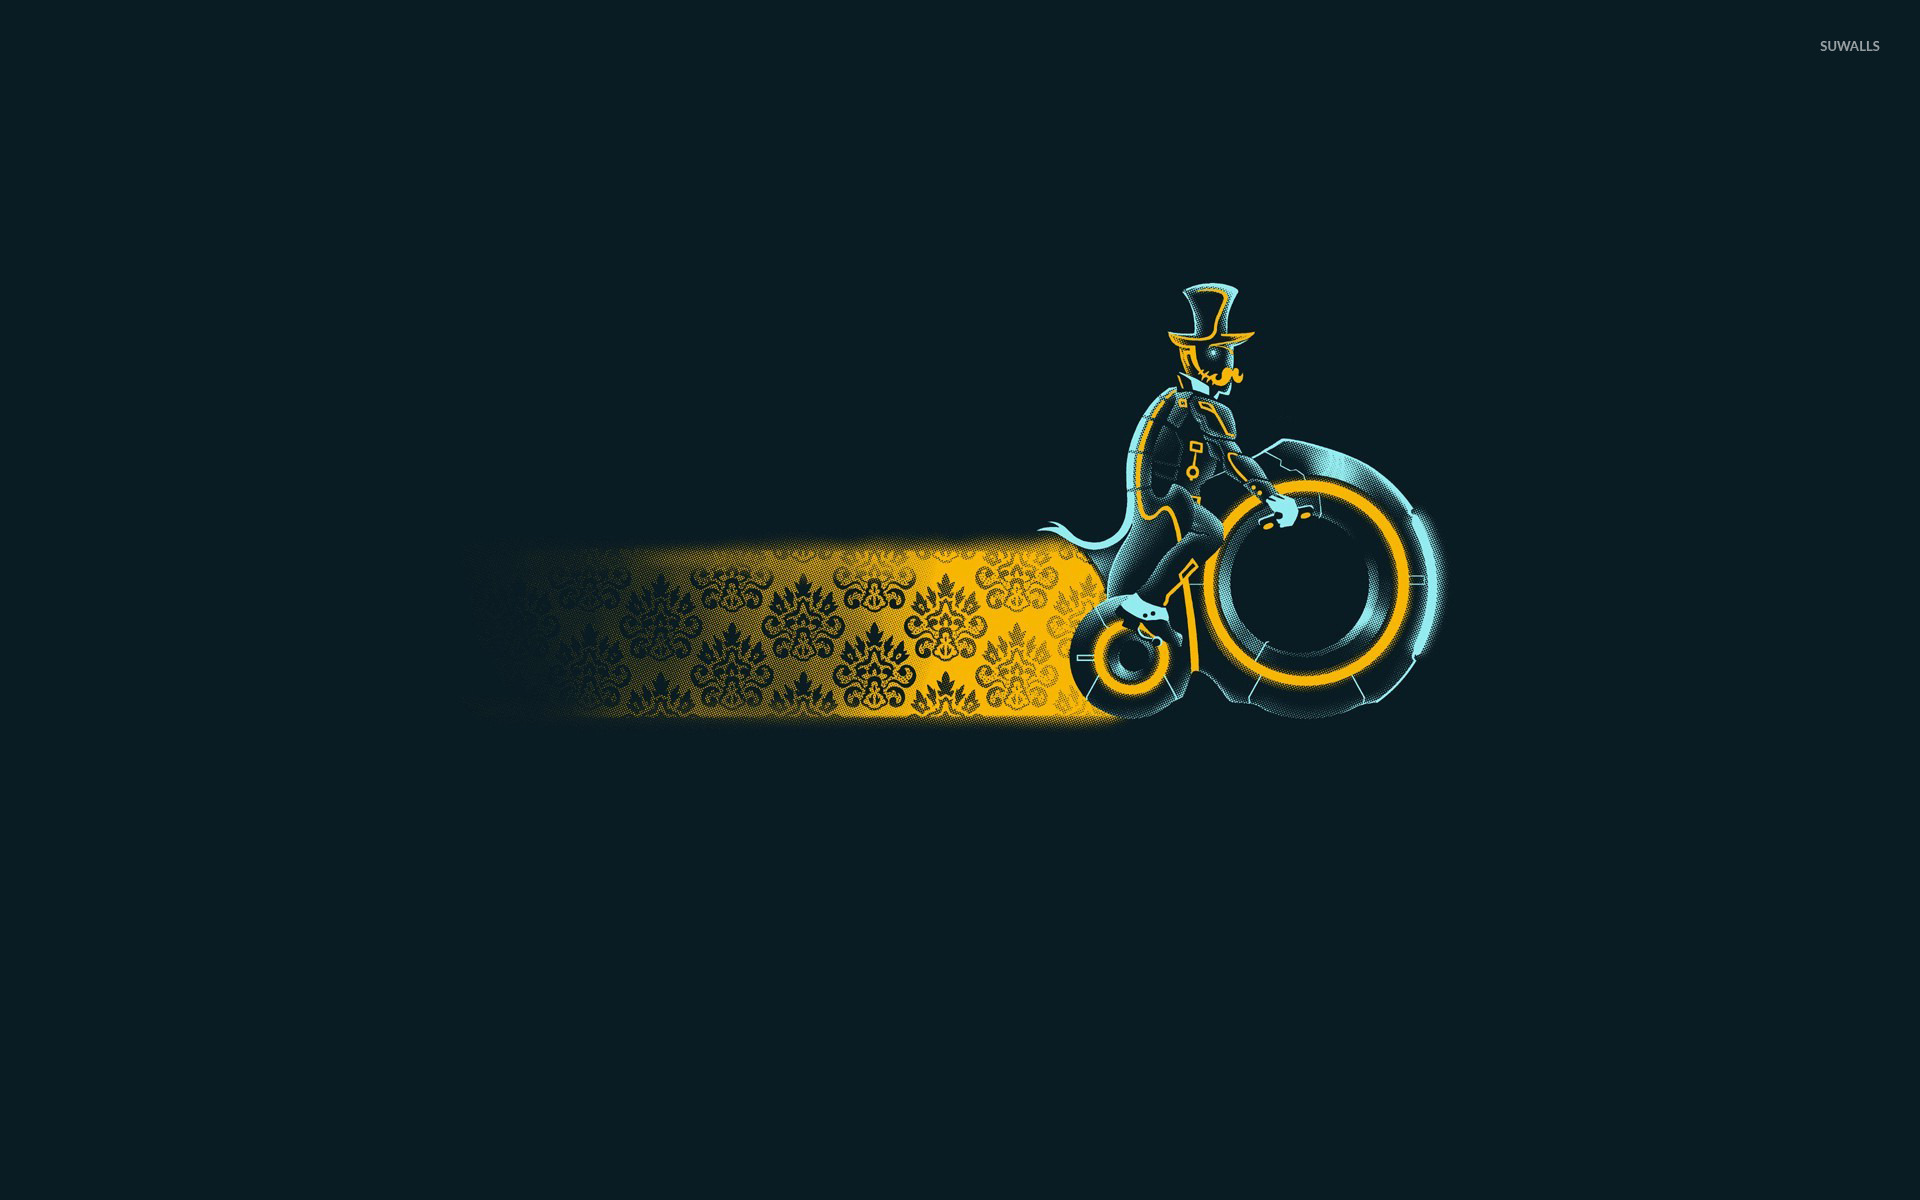 Tron Bike Wallpapers